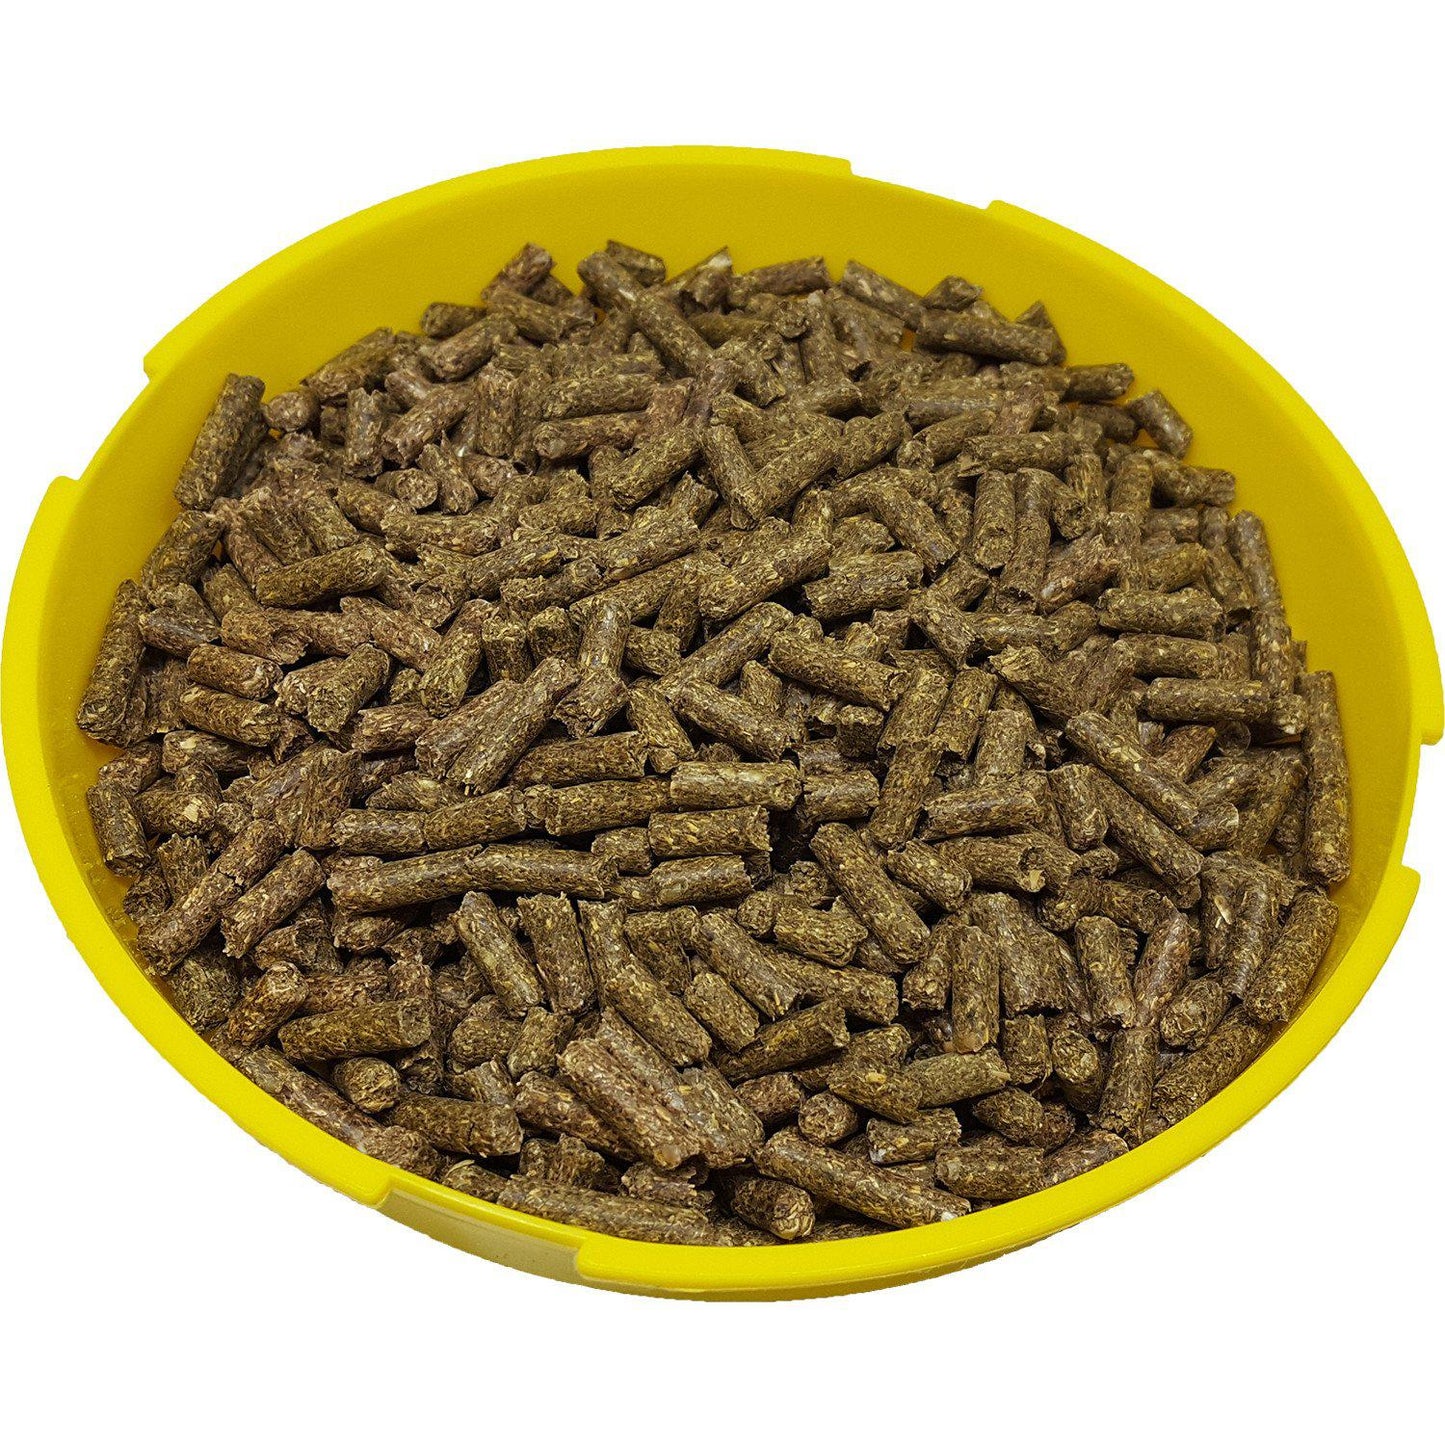 HI-PRO FEEDS® ProForm Rabbit Pellets 18% 20 KG Bag - Critter Country Supply Ltd.